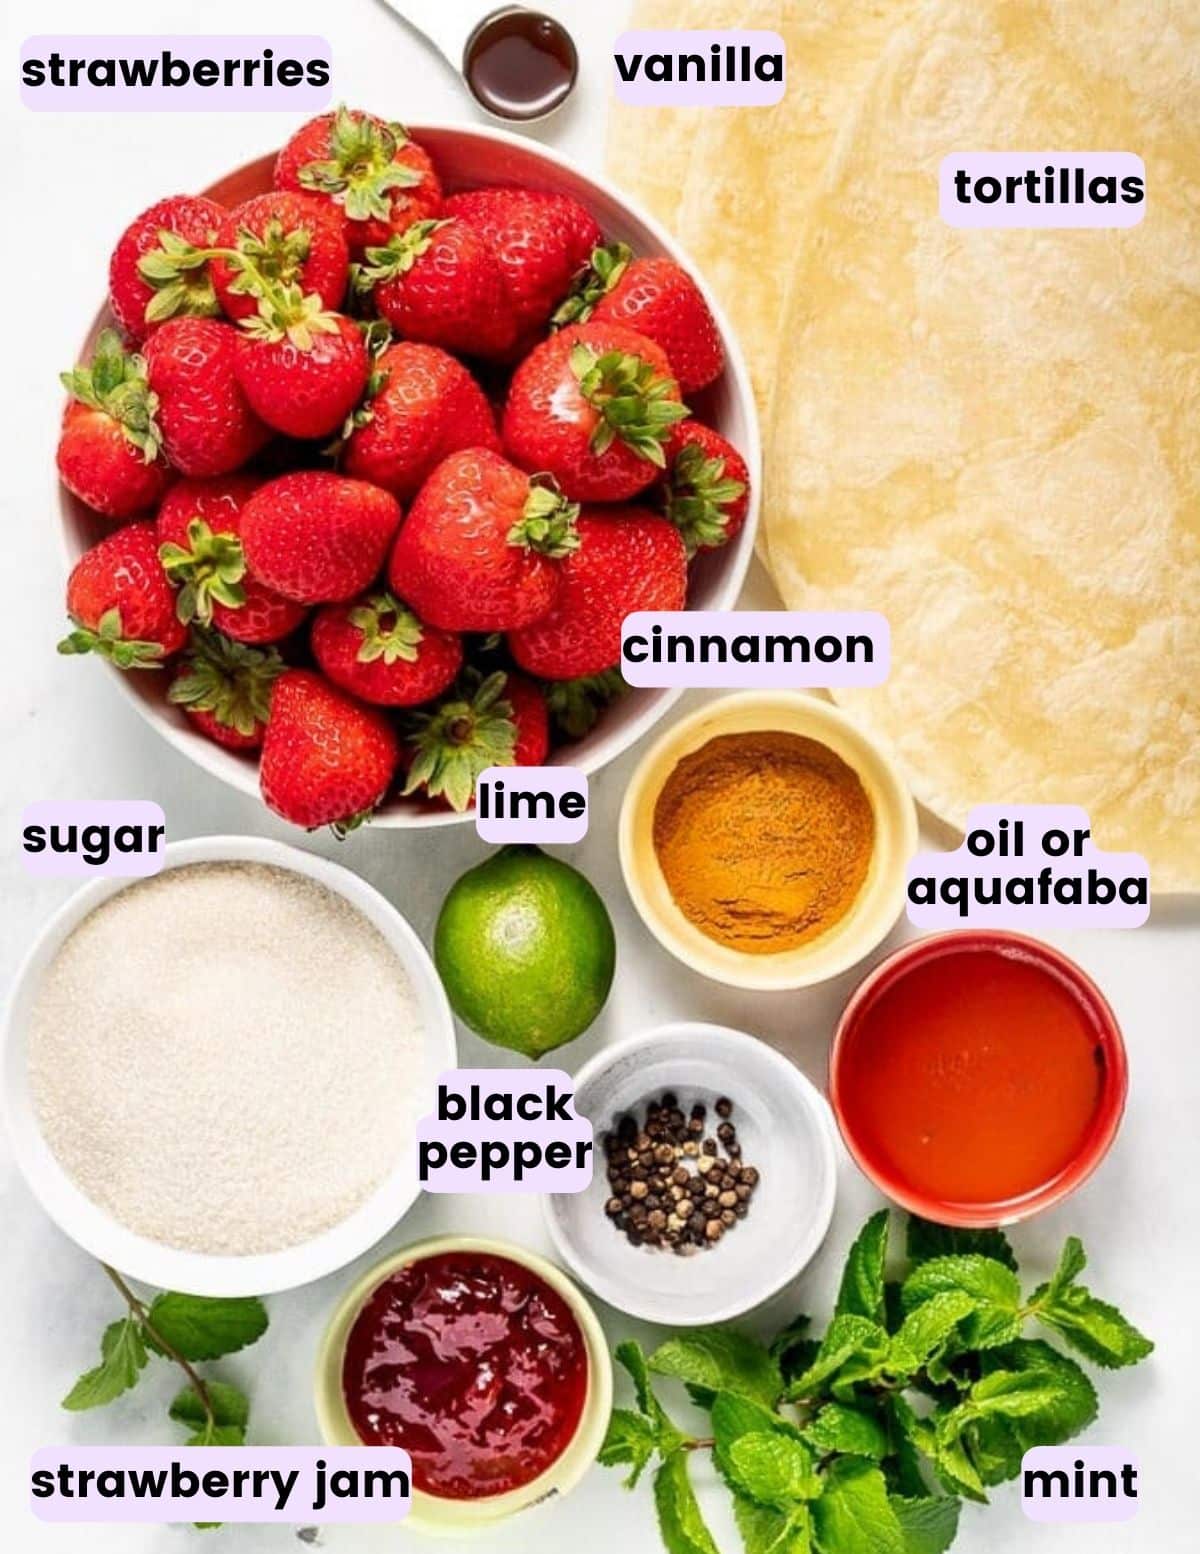 strawberries, vanilla, tortilla, cinnamon, sugar, lime, oil or aquafaba, black pepper, mint, strawberry jam.